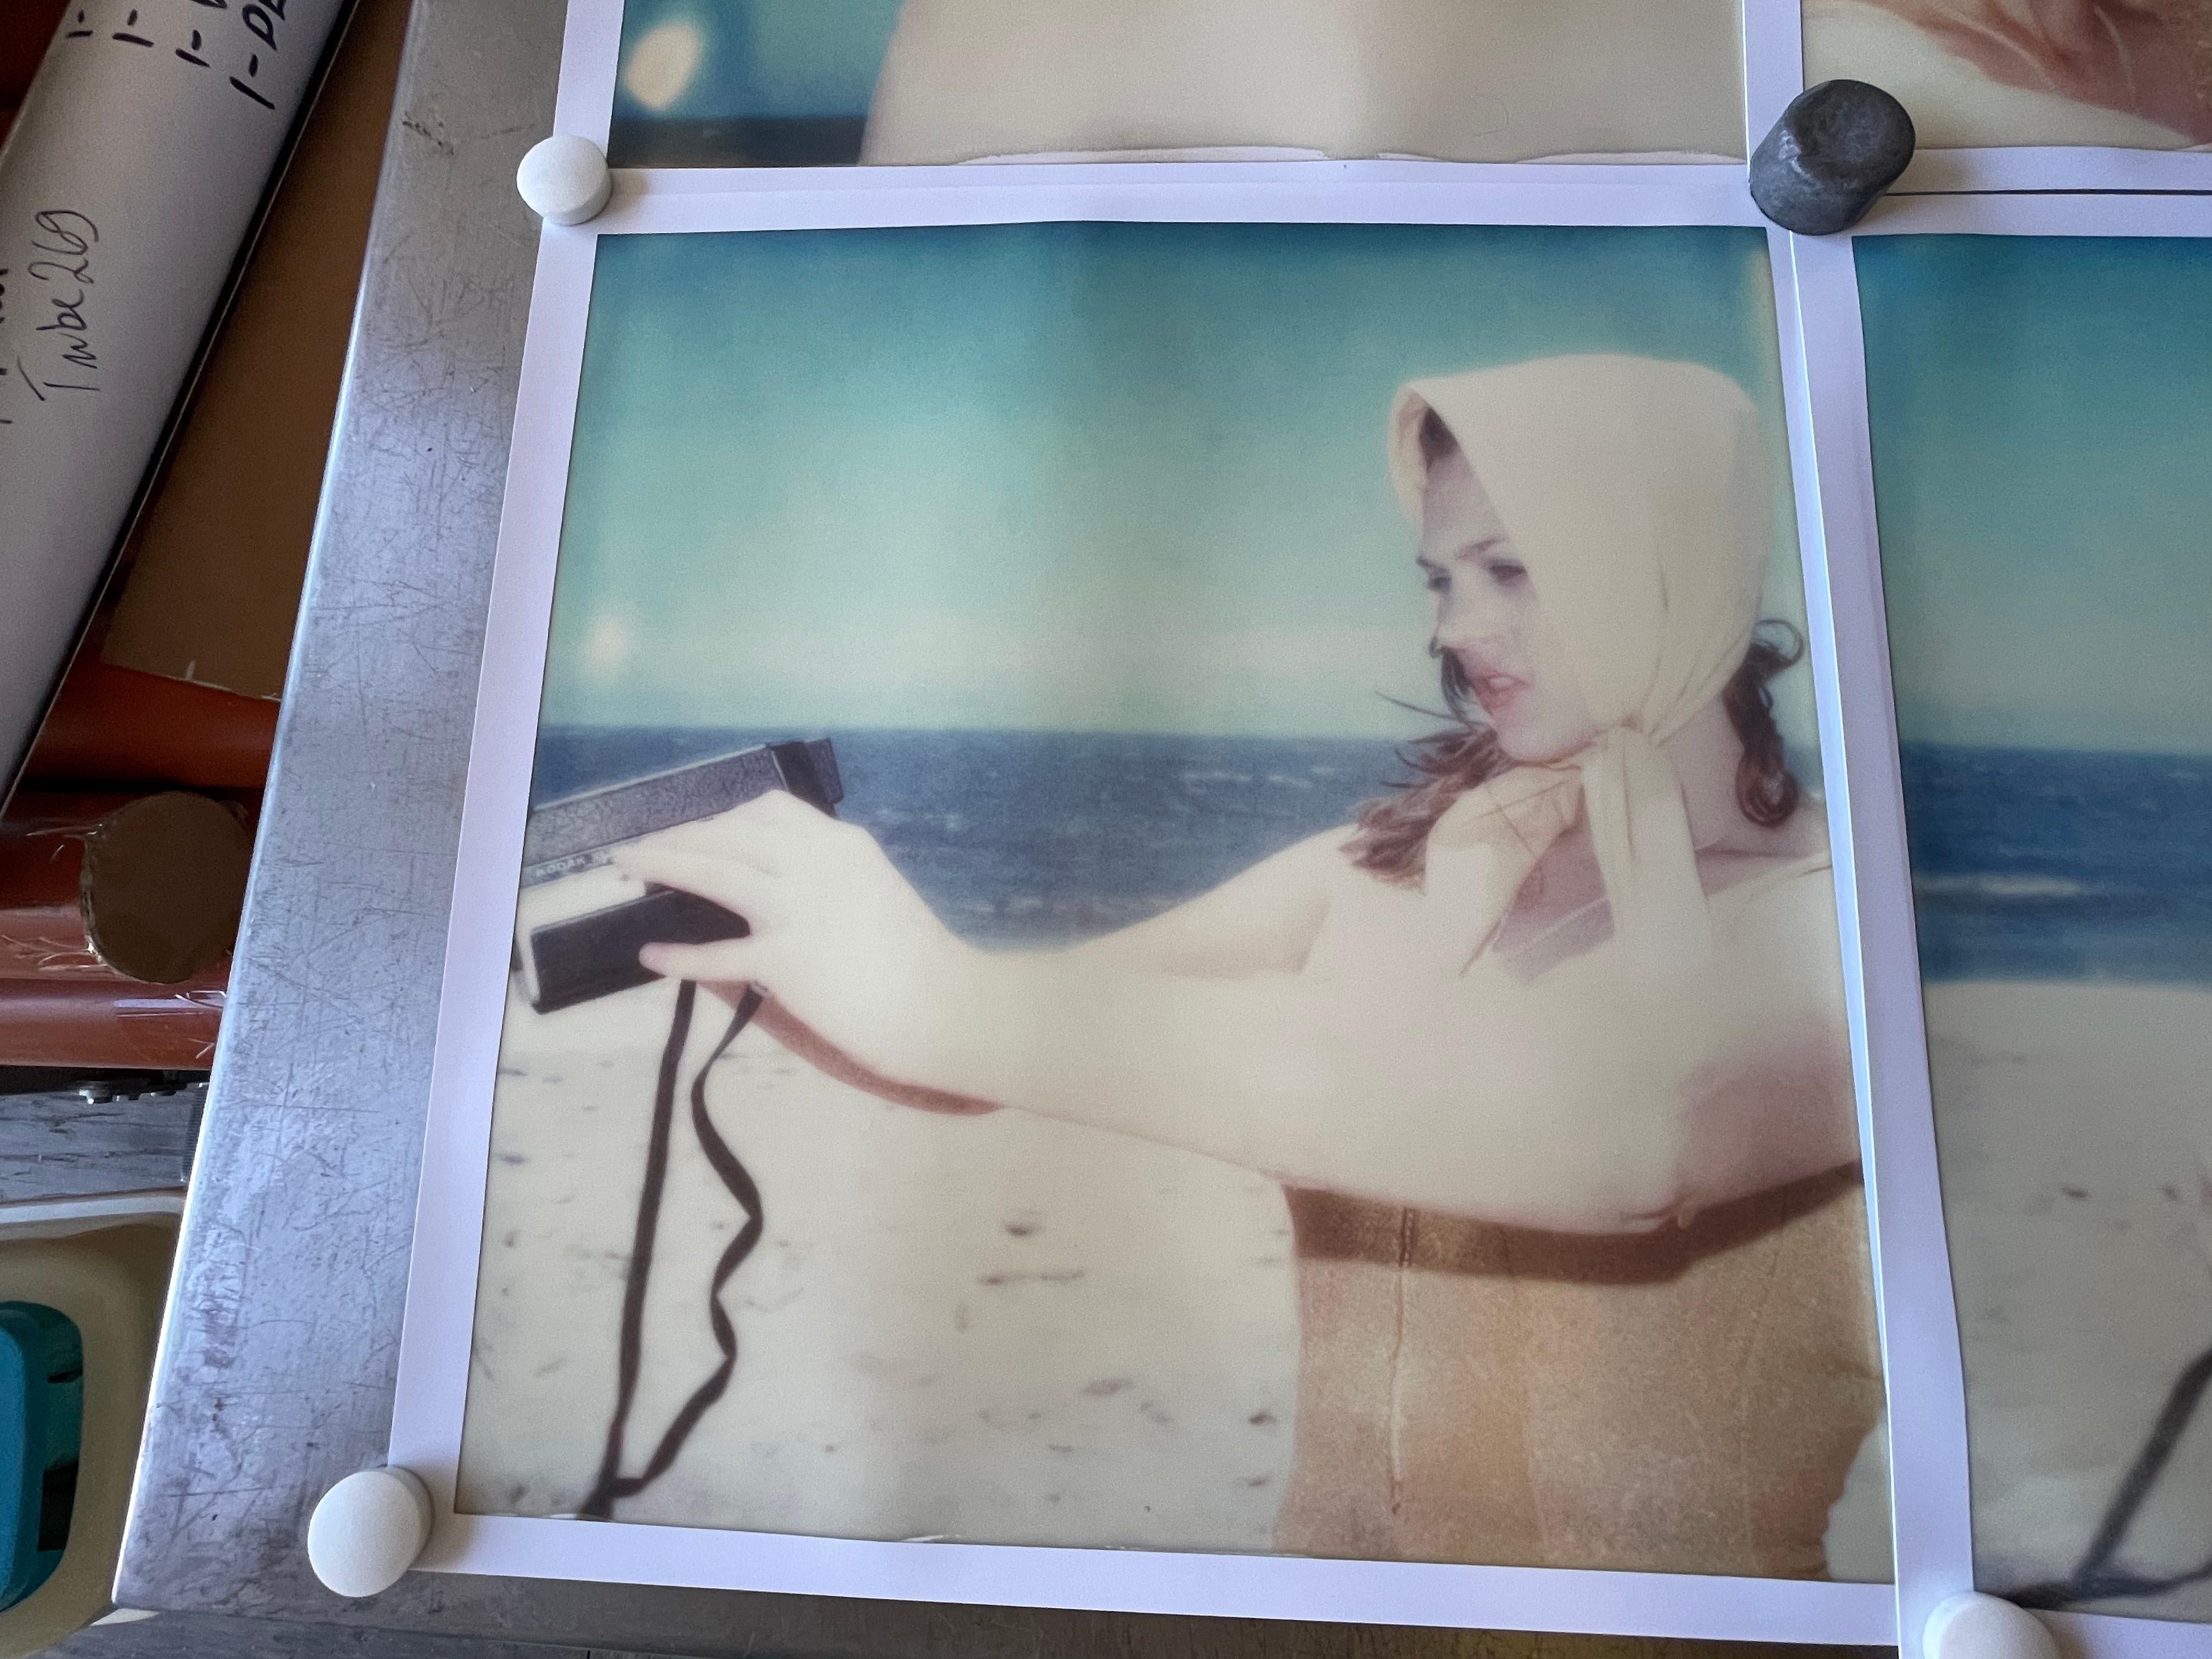 The Diva and the Boy (Beachshoot) - 9 pieces - Polaroid, Vintage, Contemporary 6